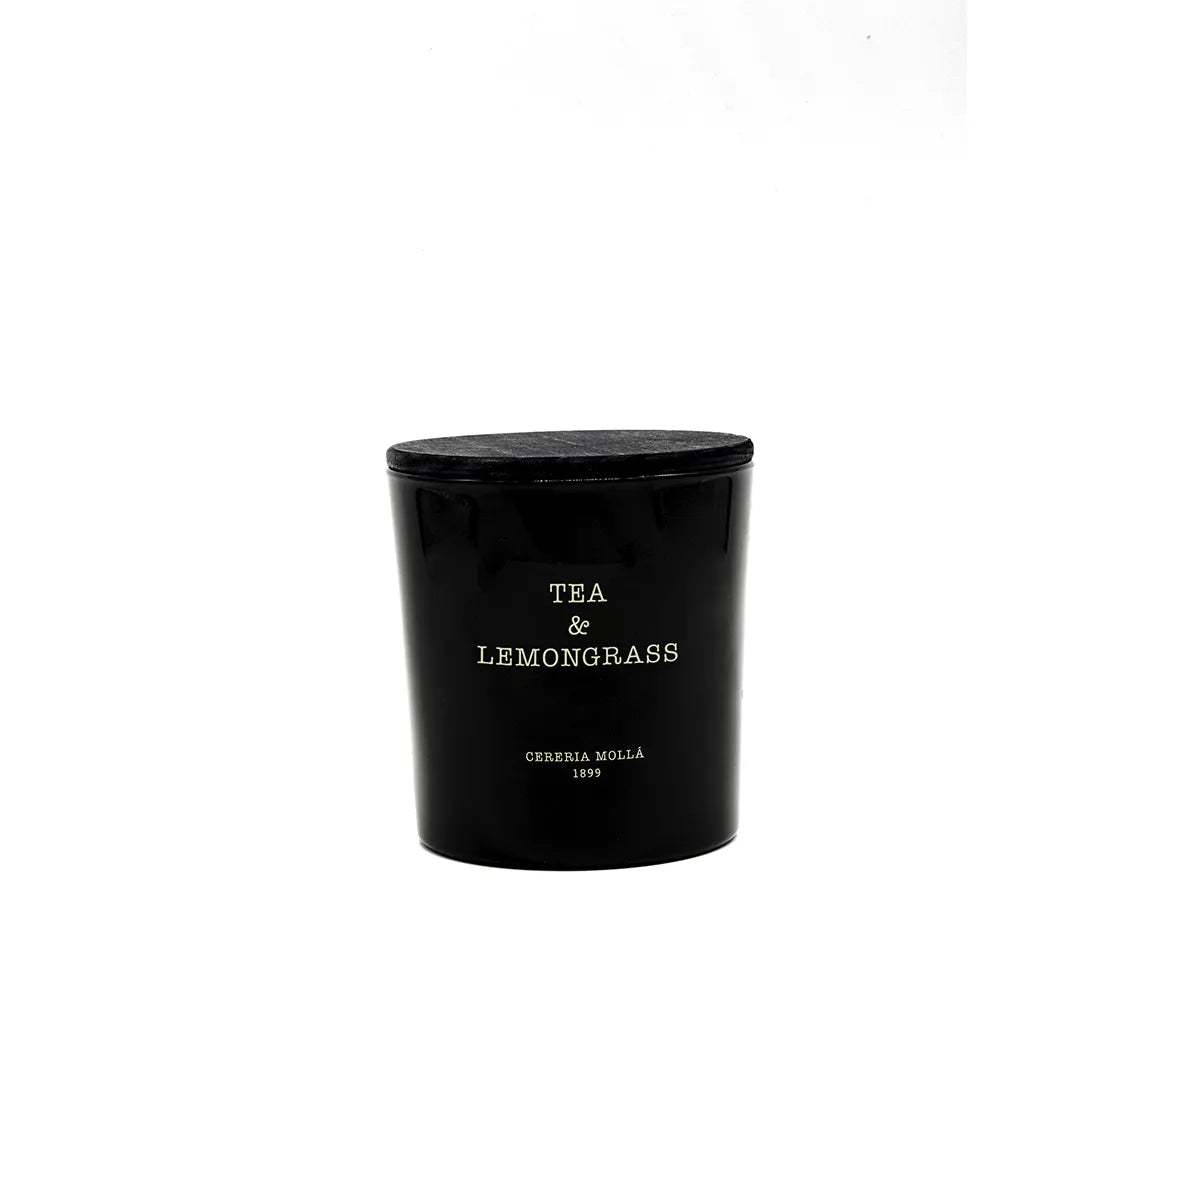 600g Premium Candle - Tea and Lemongrass